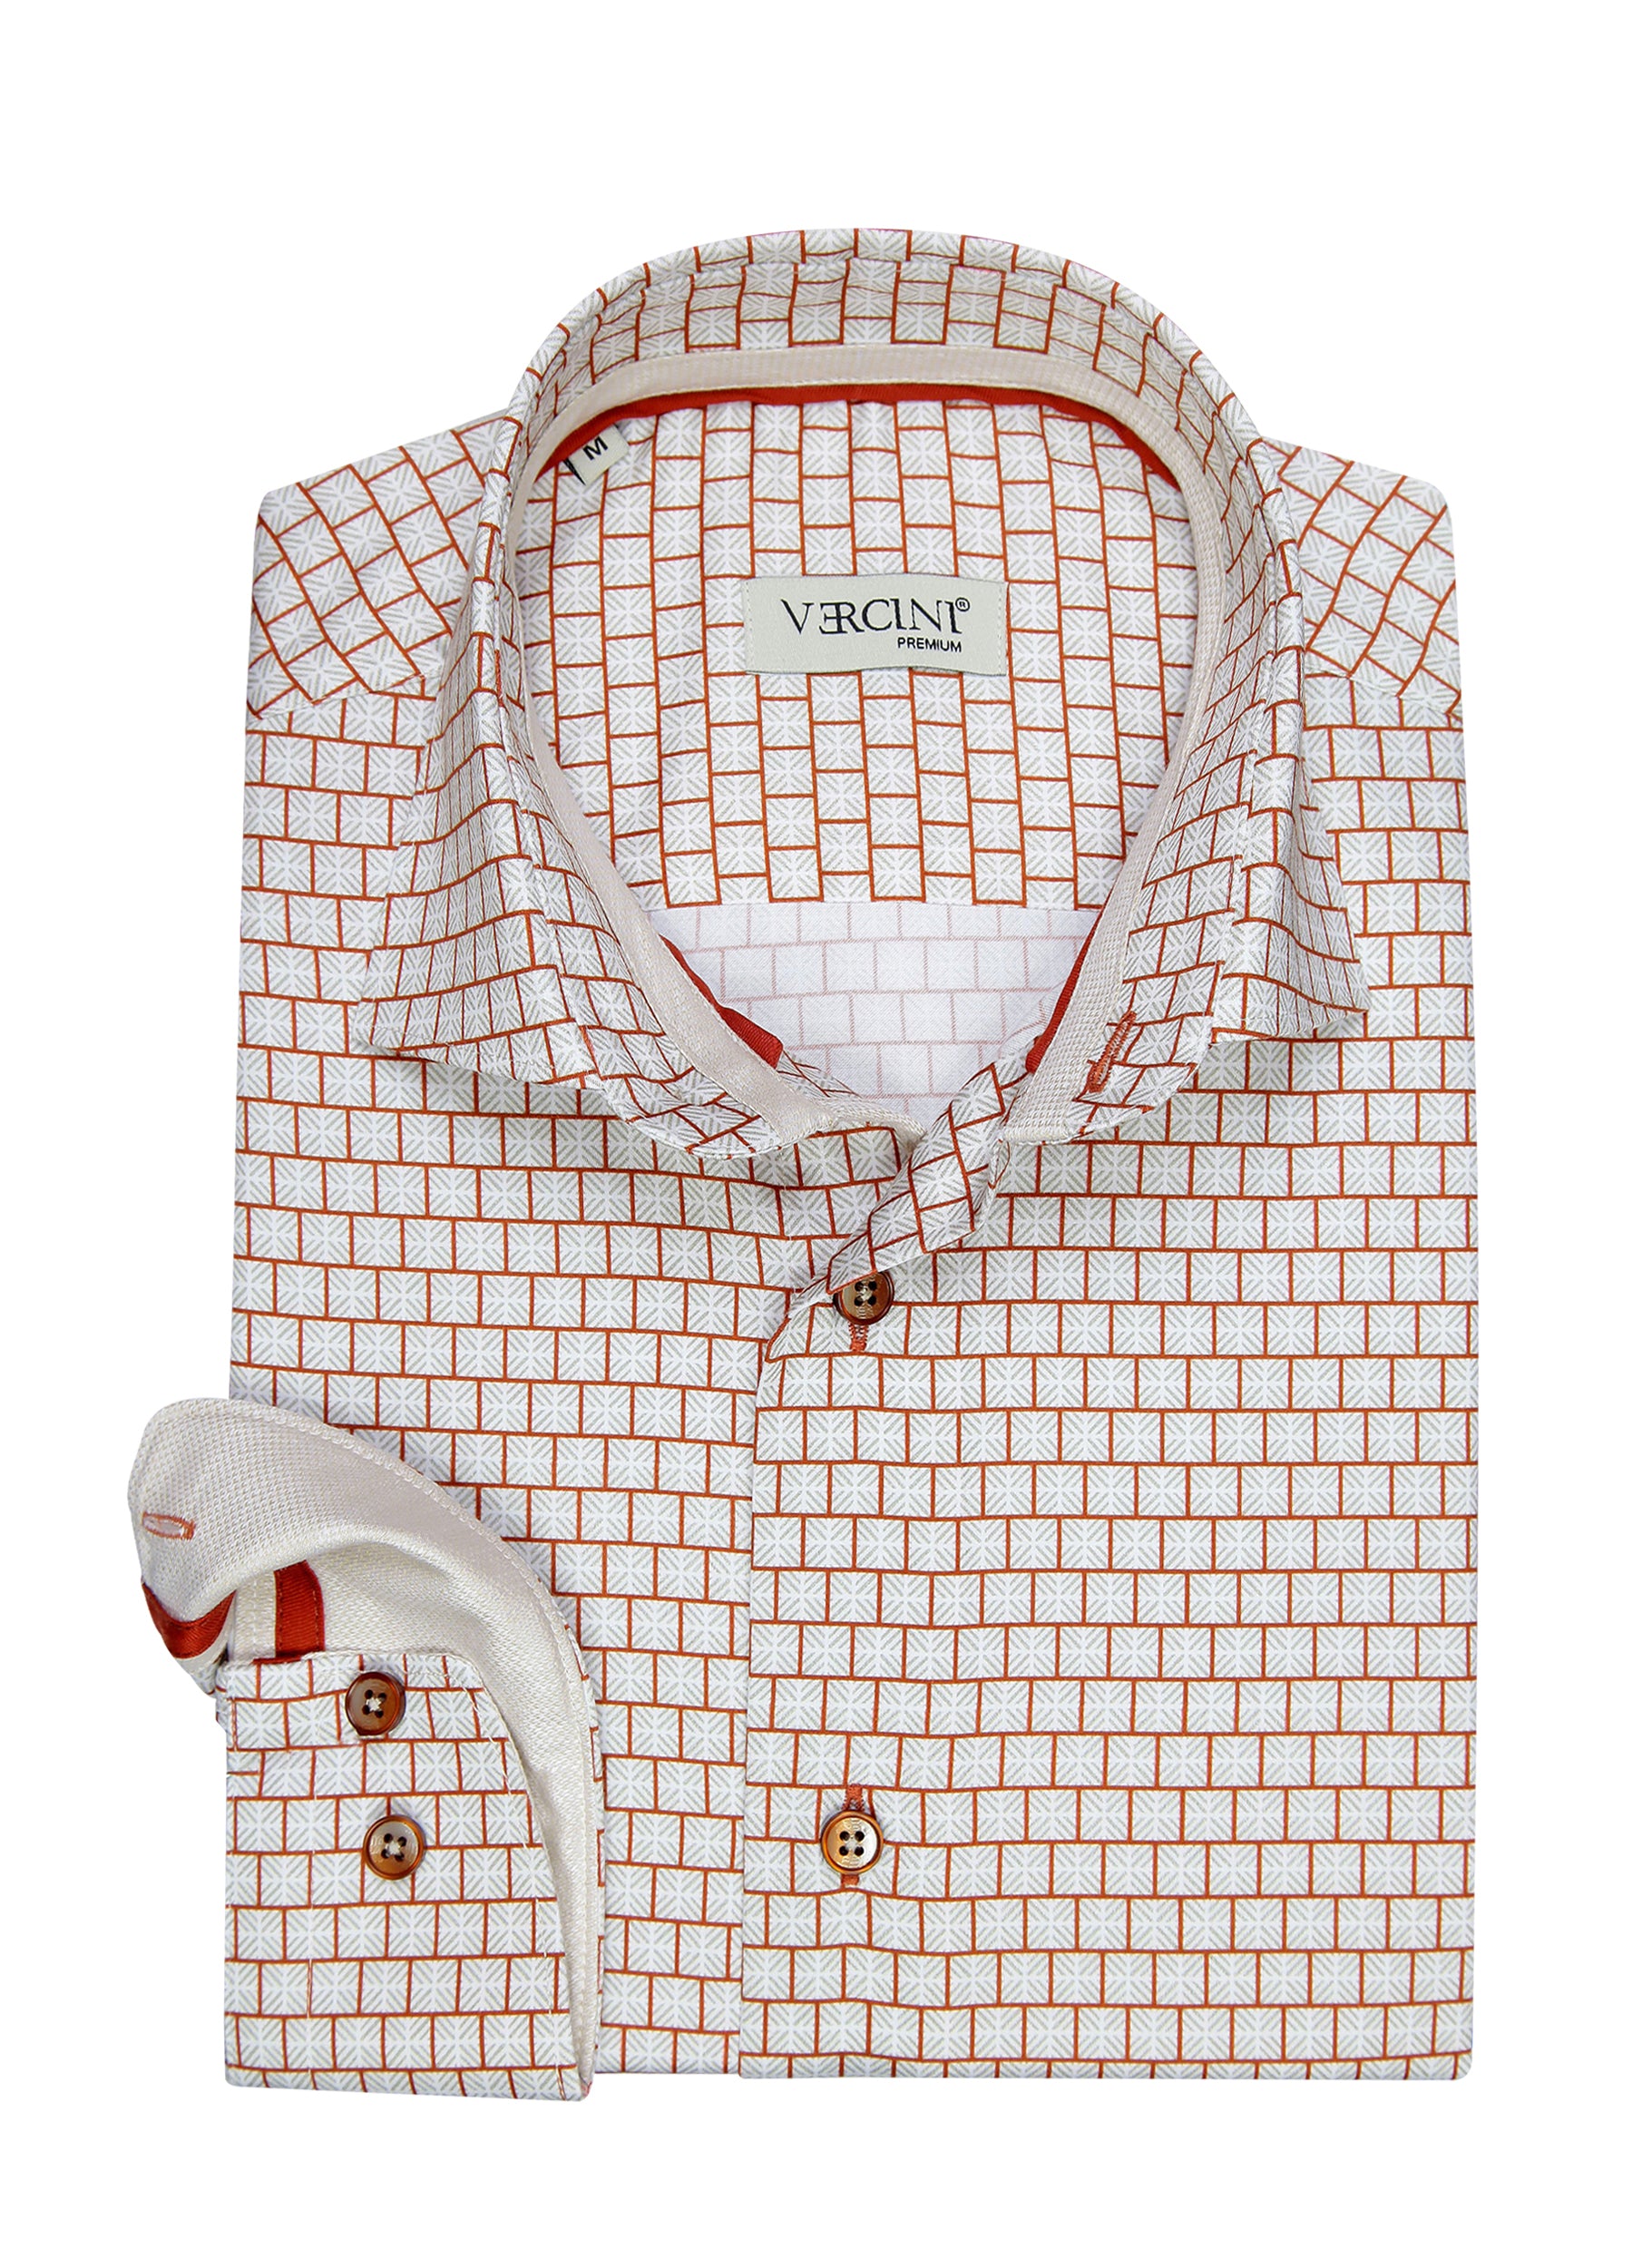 Geometric Harmony Tailored Men's Dress Shirt CASUAL SHIRT On Sale 30% Off Vercini